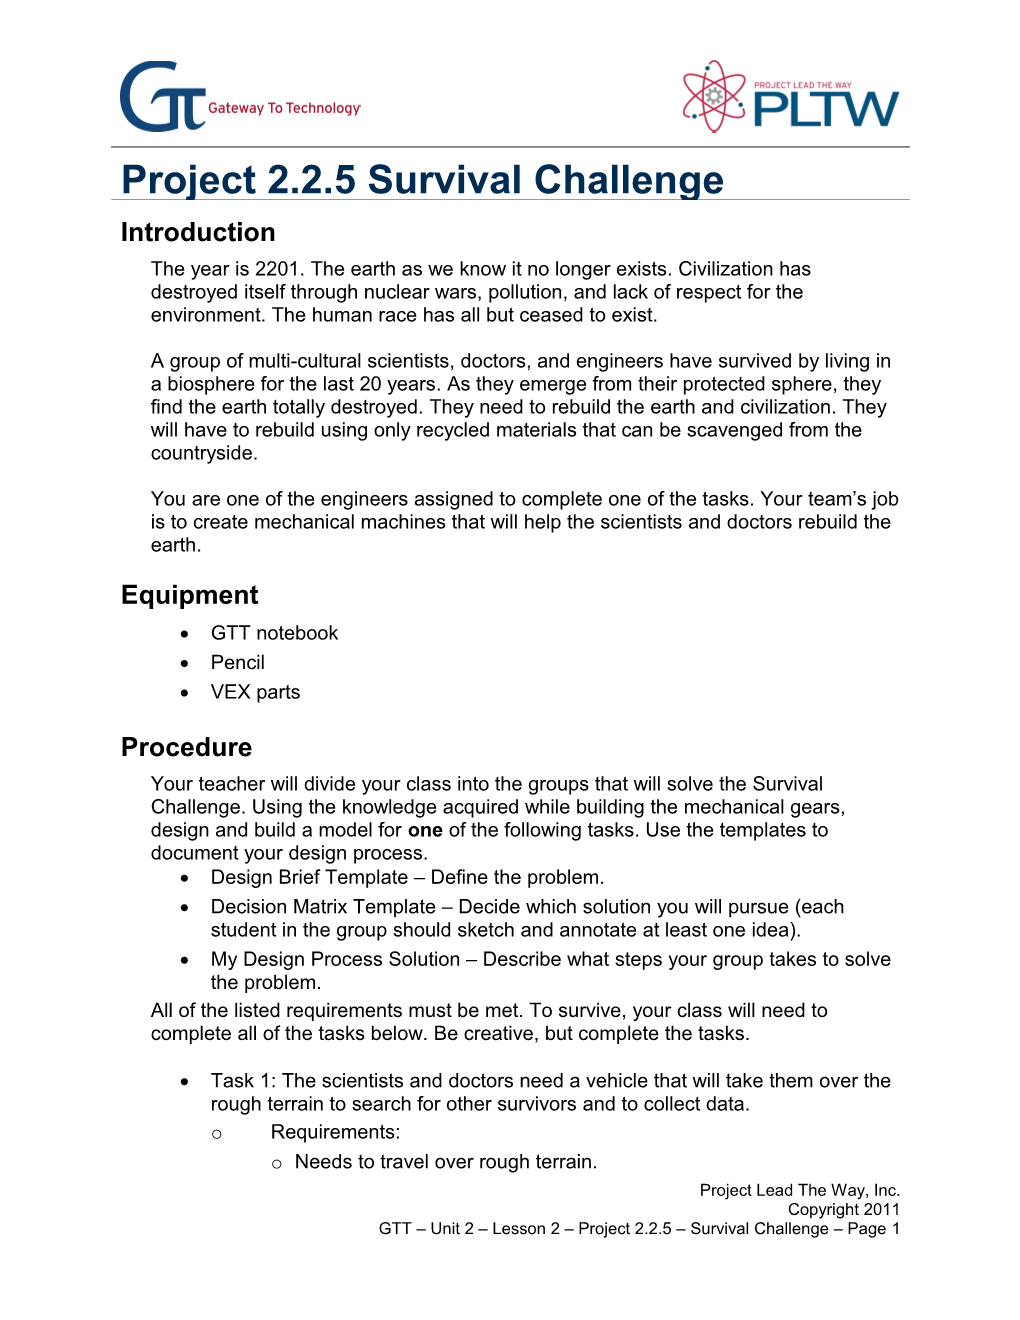 Activity 2.2.5 Survival Challenge